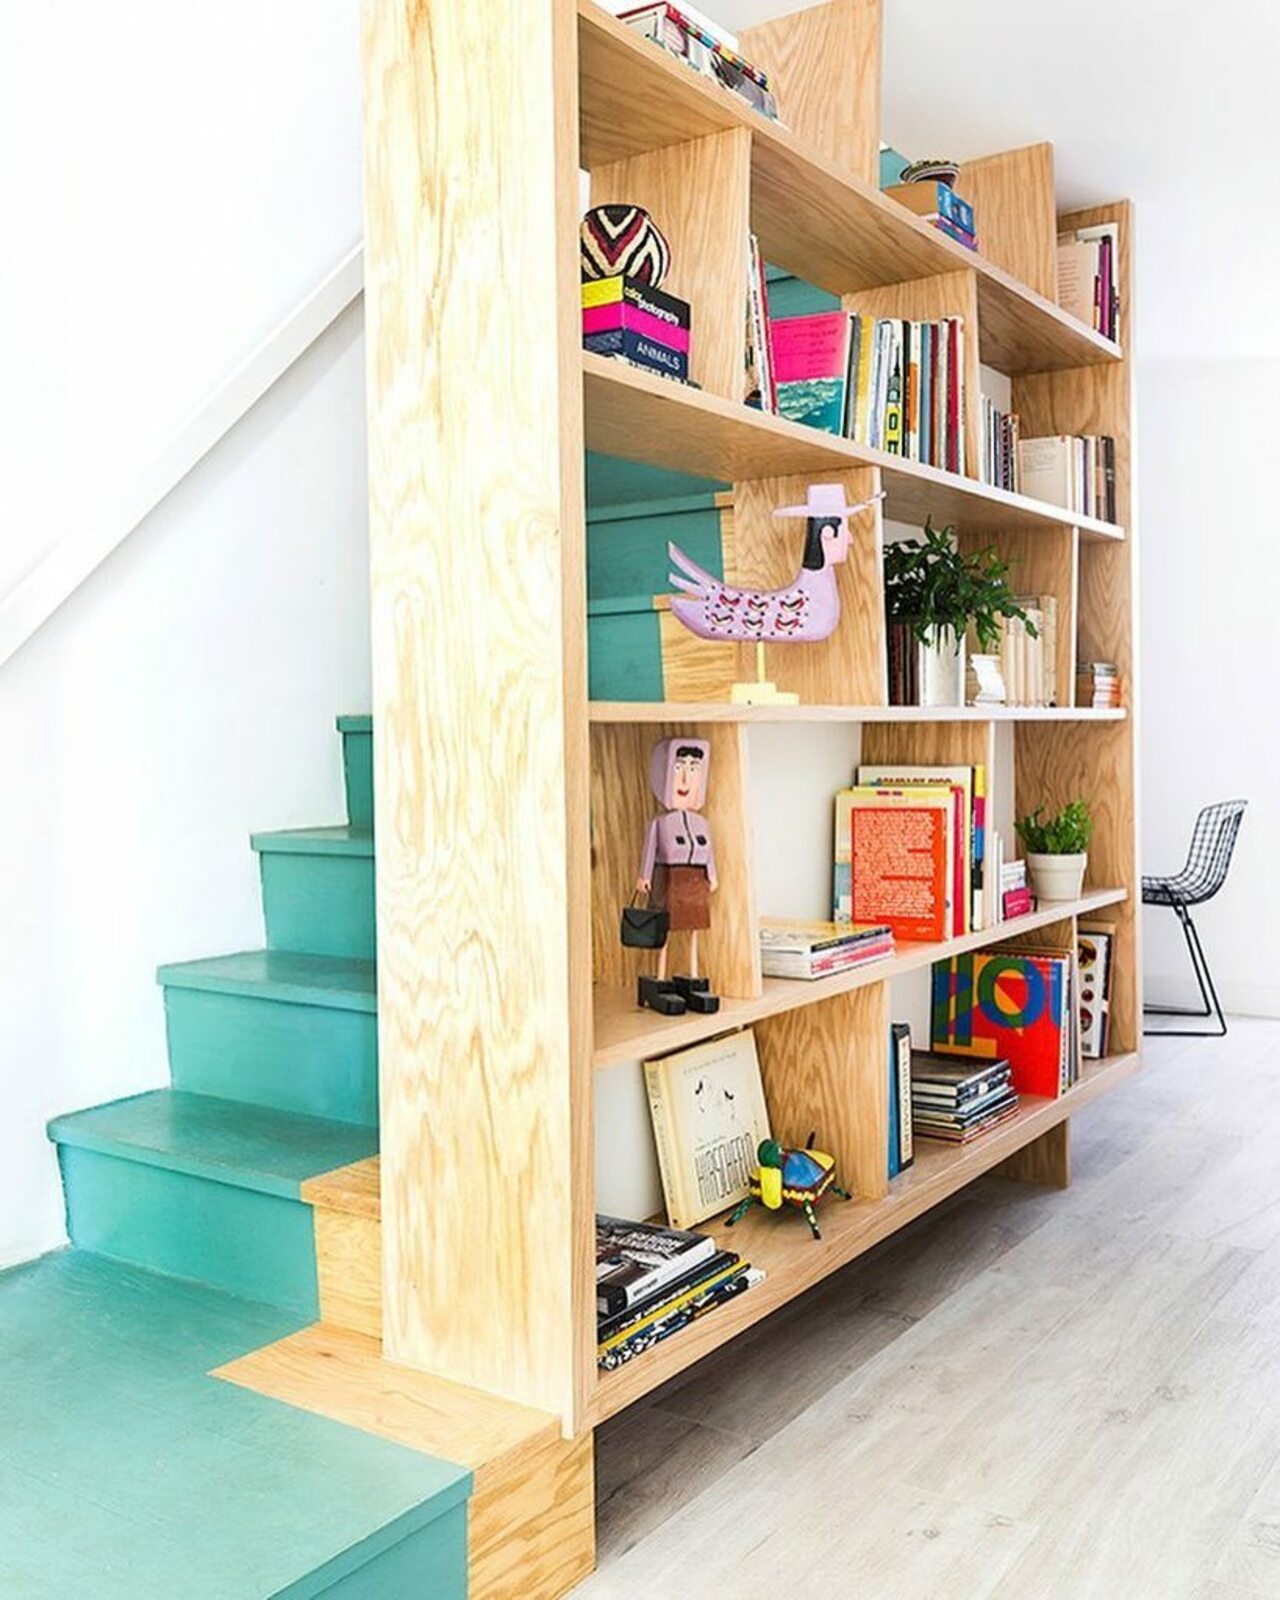 RT @alexandrabarker: #stair #staircase #bookcase #shelving with #greenpaint #runner #bfdo #architecture #design  thanks @brownstoner for… https://t.co/ZegA5WYF6e